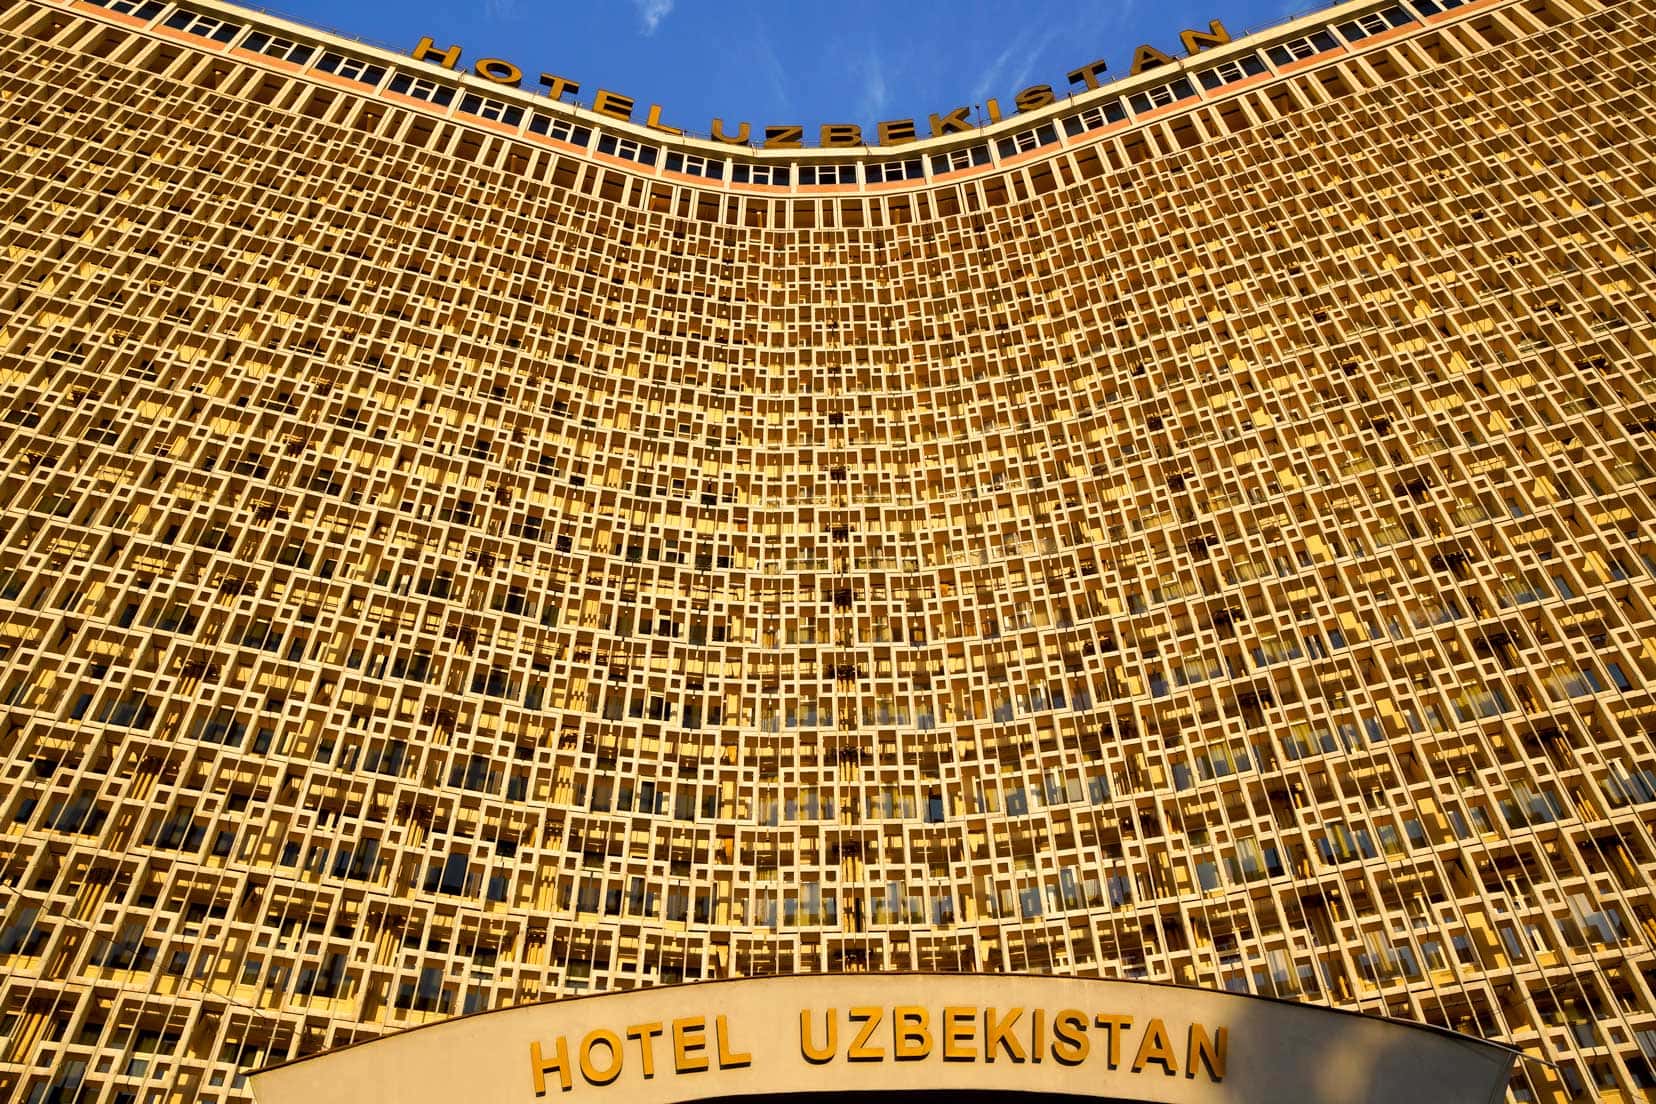 Uzbekistan hotel, Tashkent.